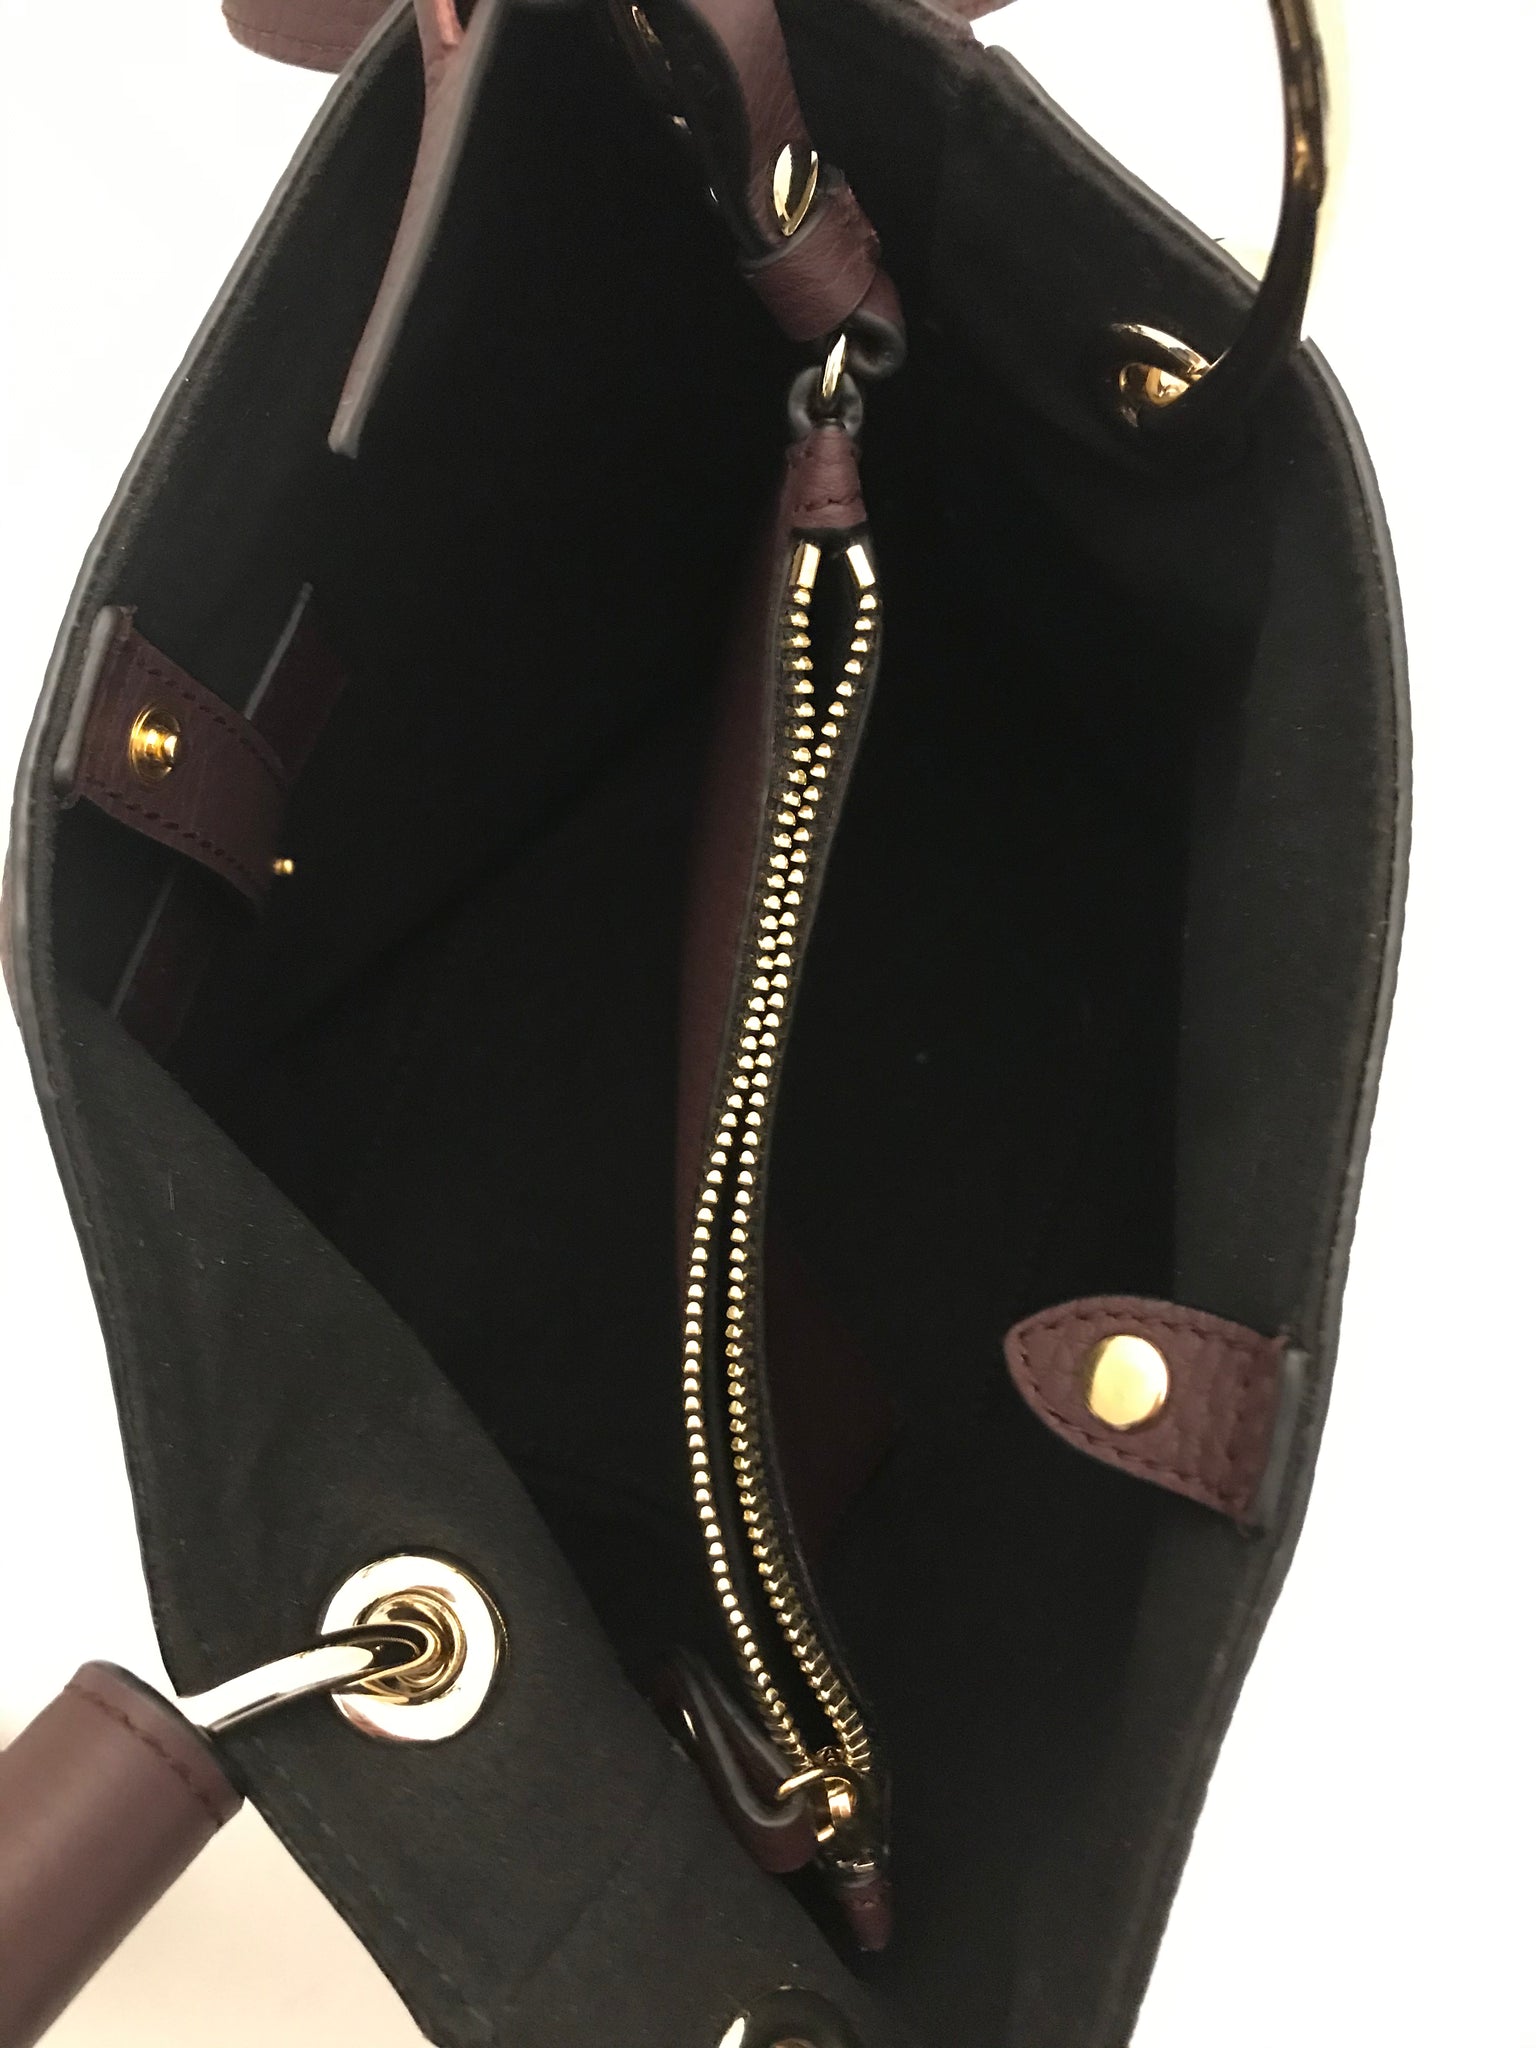 STRATHBERRY: Lana Nano Black Grain Leather Bucket Bag - The Lean